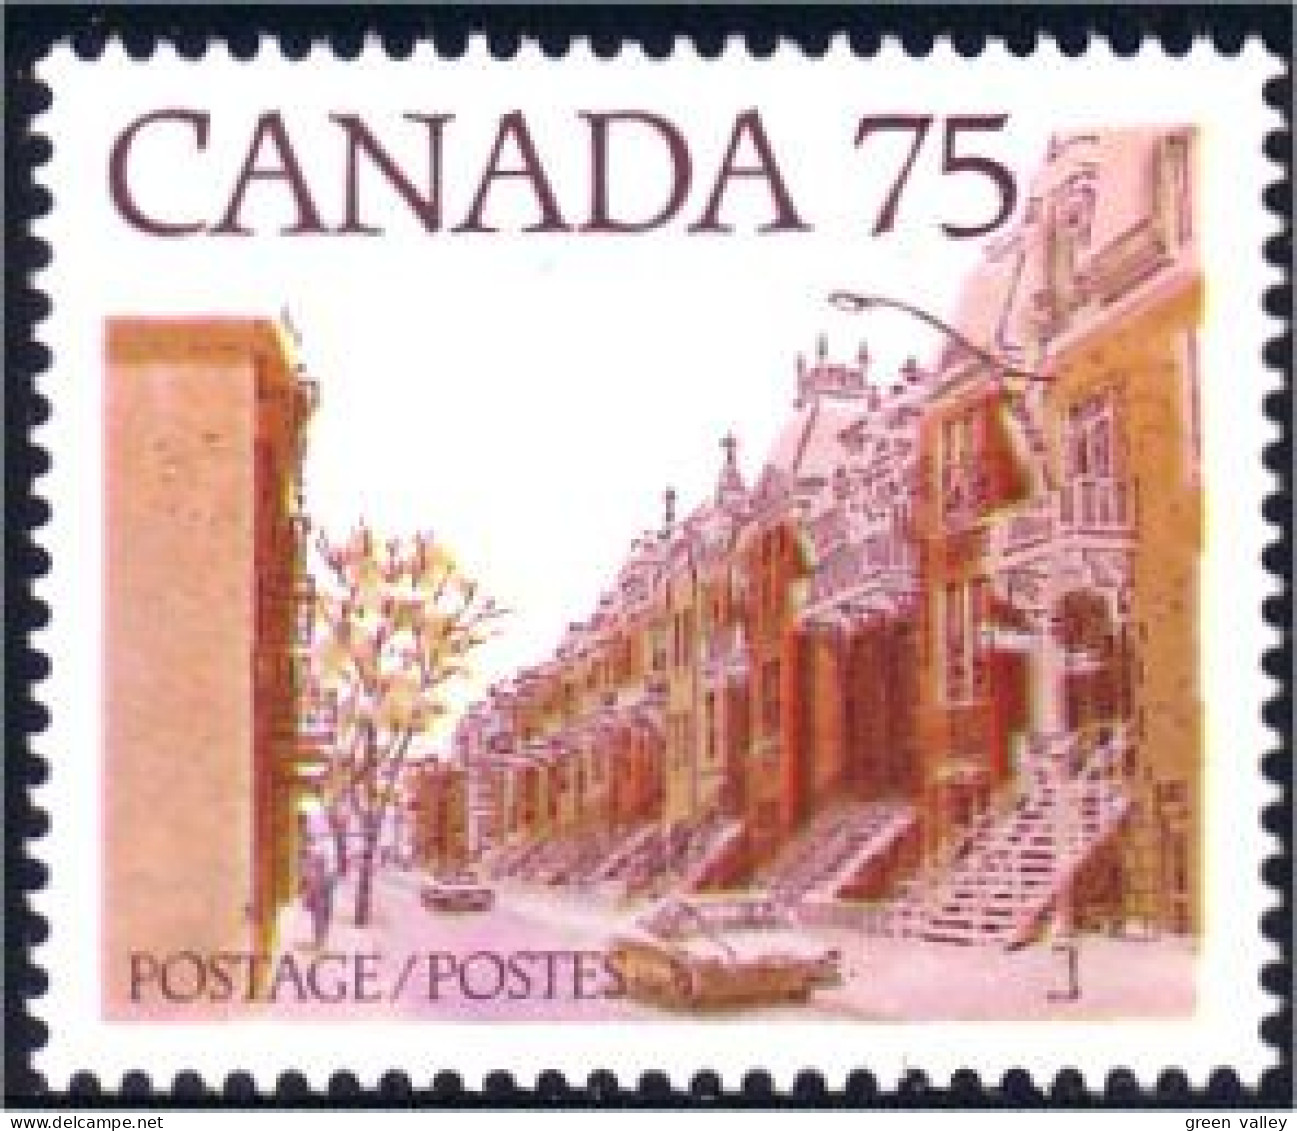 (C07-24) Canada Rangée De Maisons Row Houses MNH ** Neuf SC - Nuovi